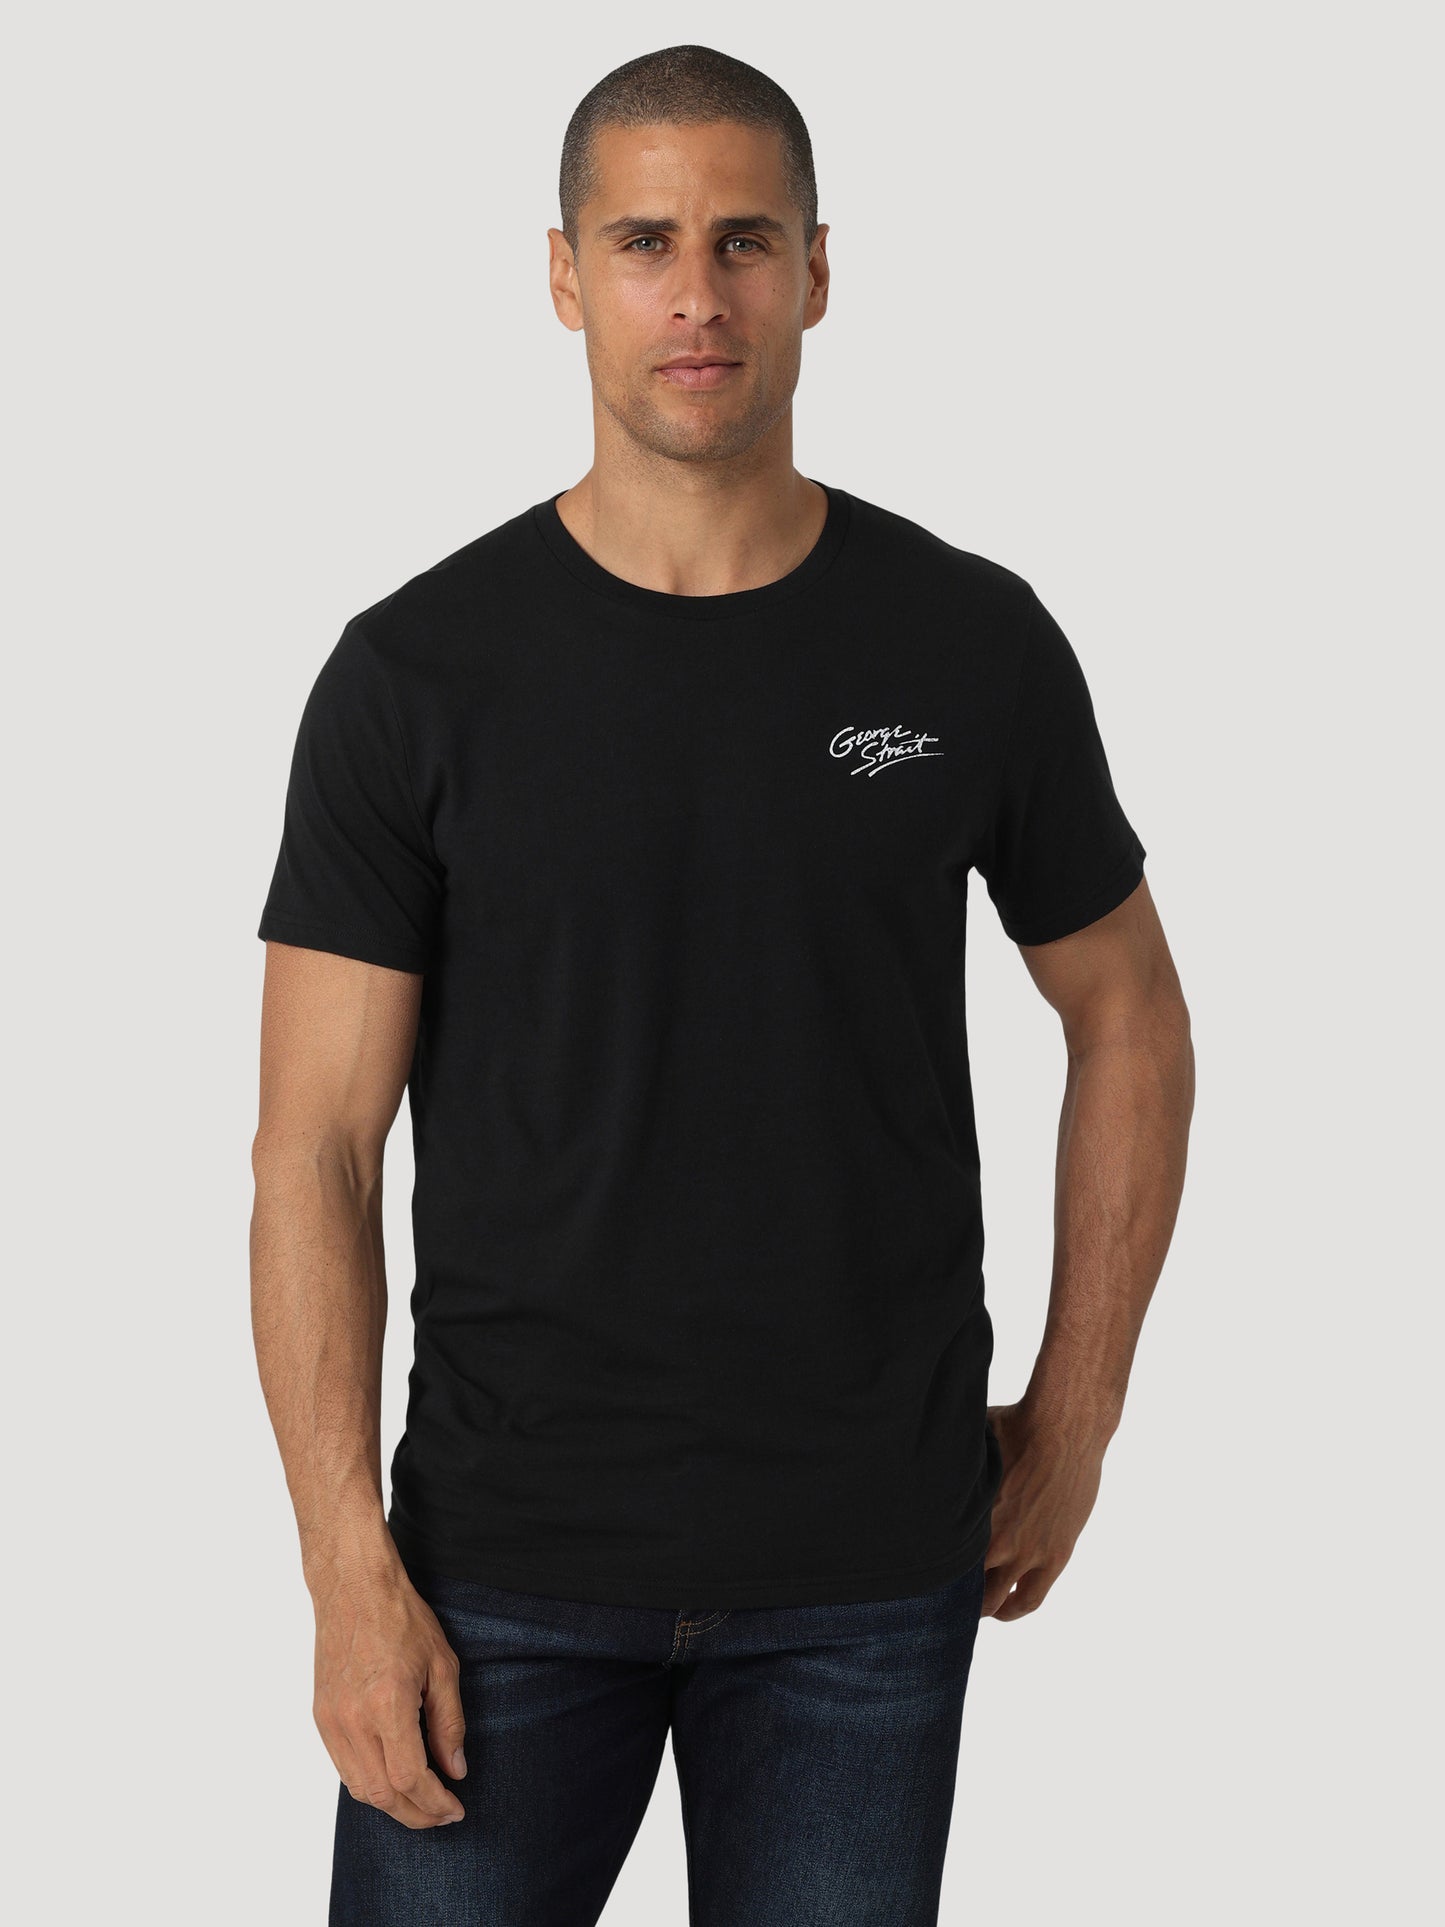 Wrangler George Strait Silhouette GLow T-shirt - Jet Black